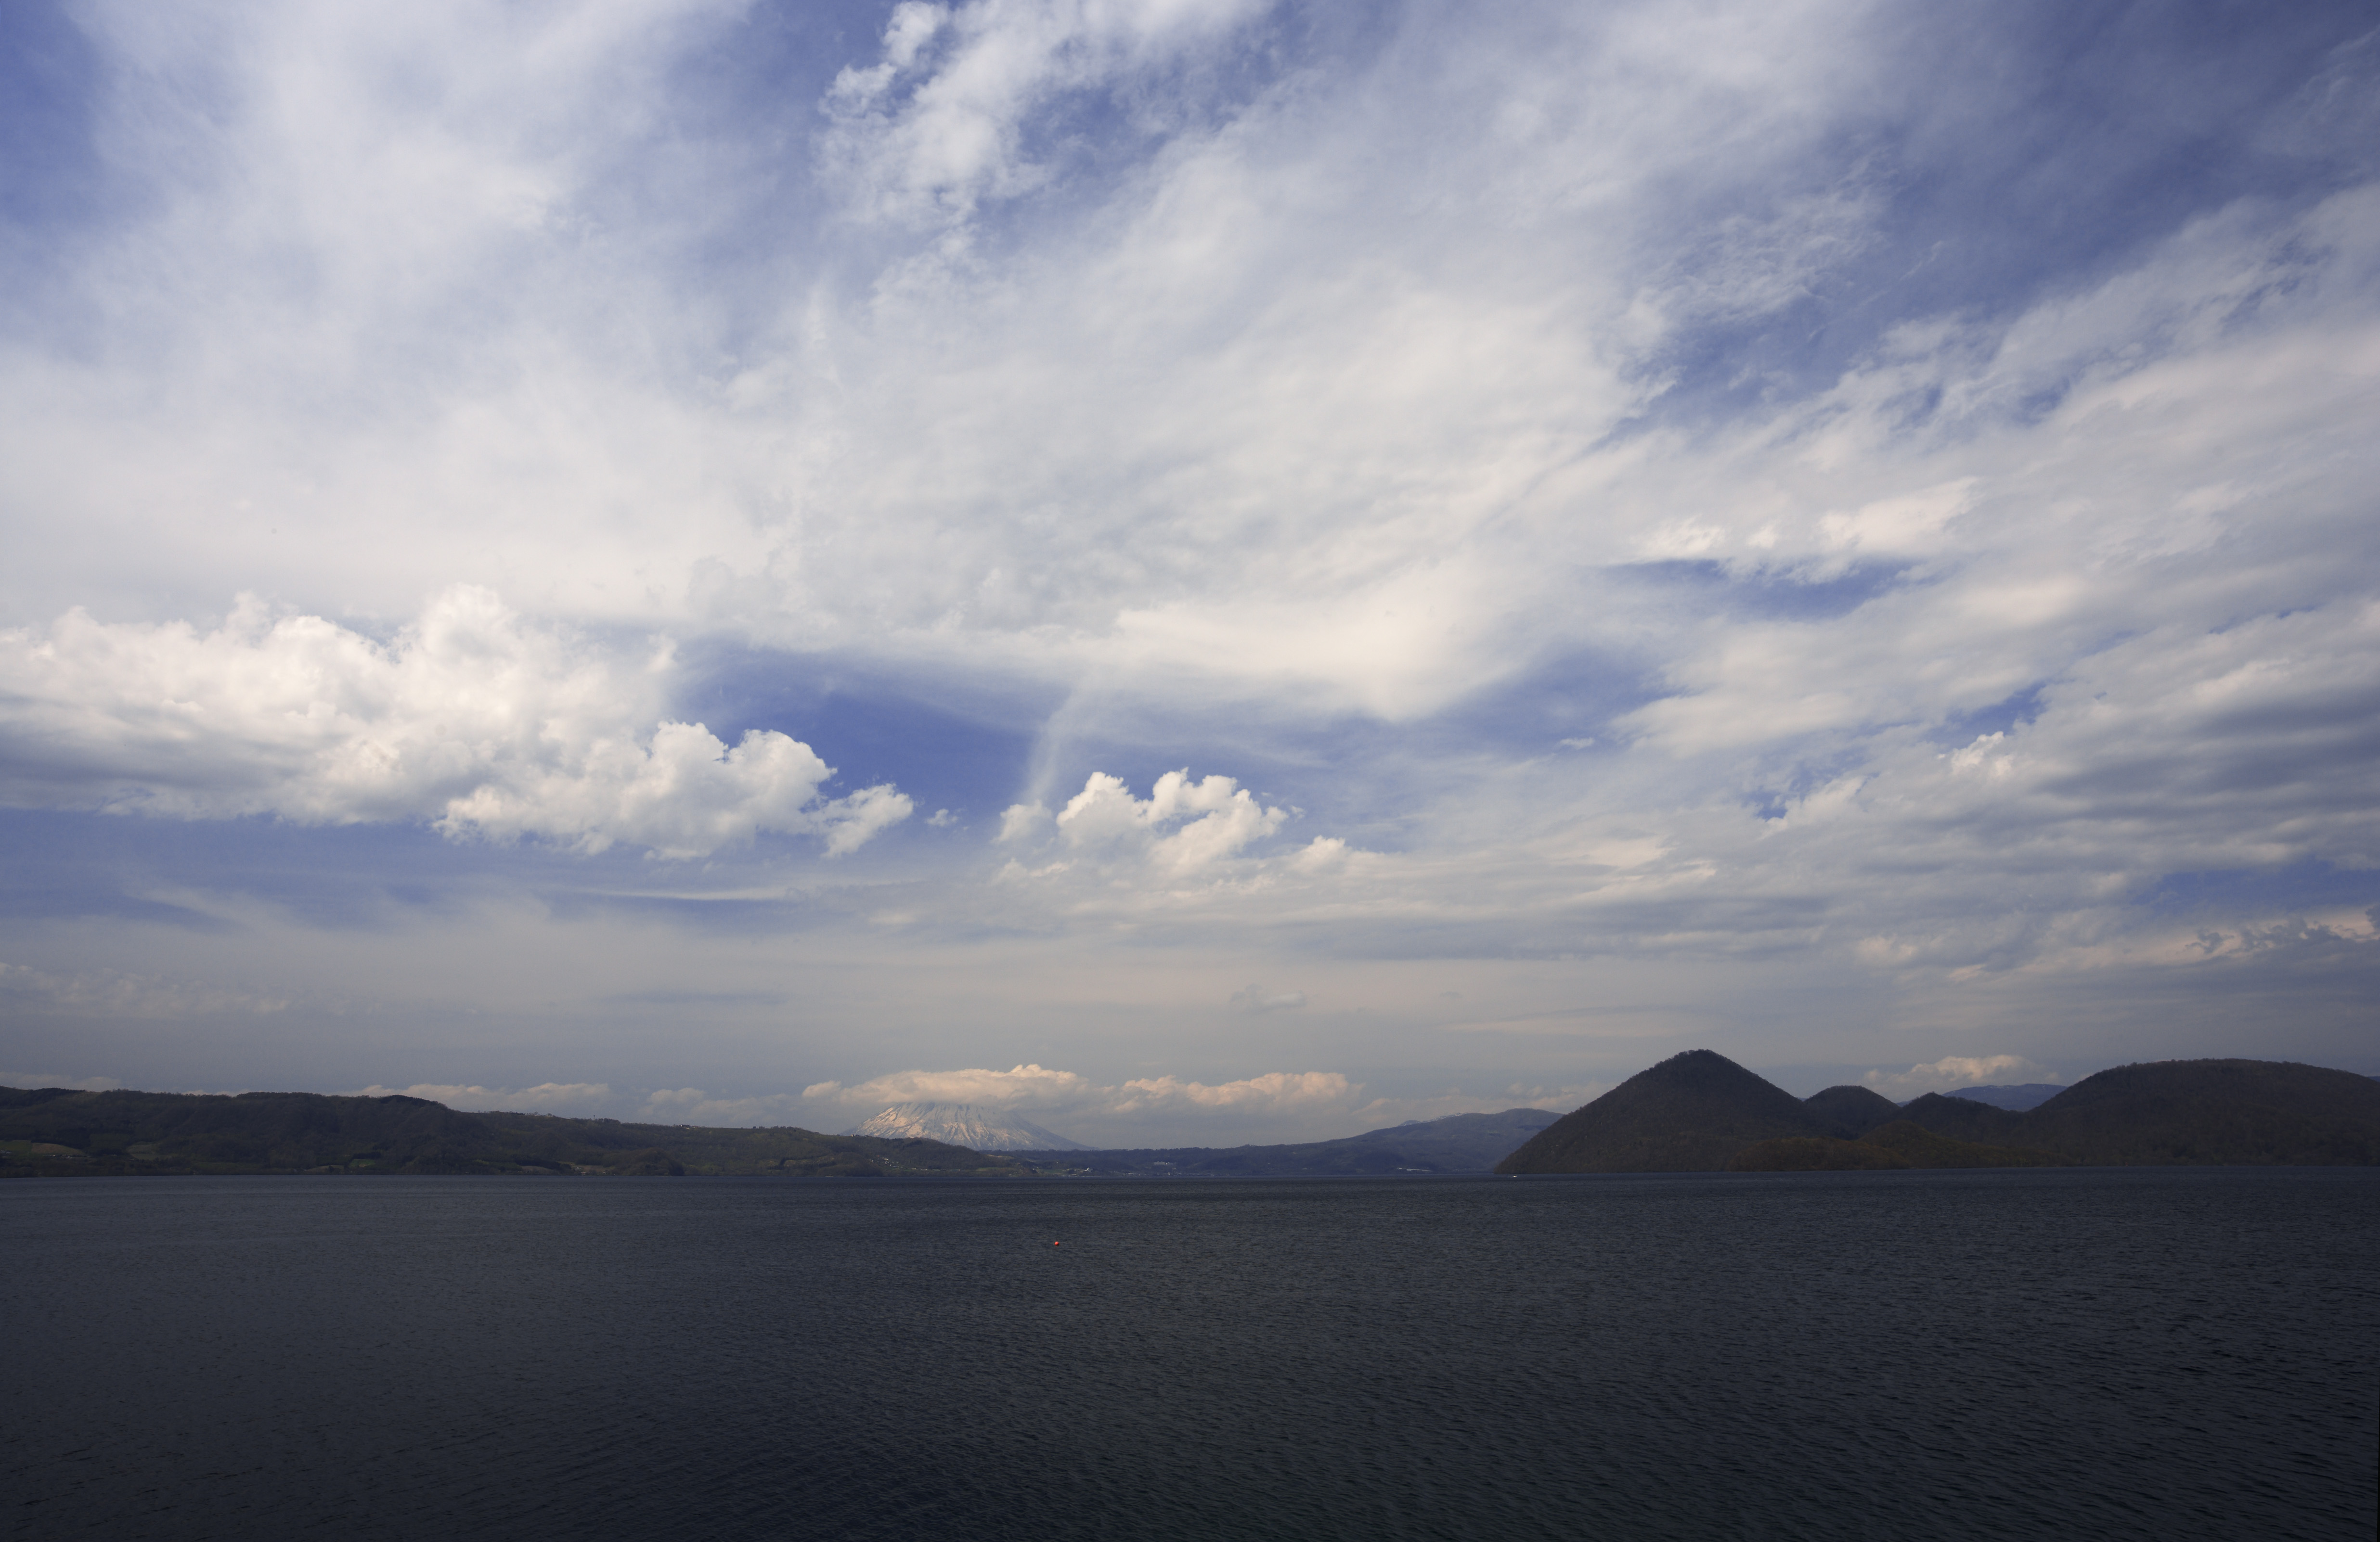 fotografia, material, livra, ajardine, imagine, proveja fotografia,Lago Toya-ko e Mt. cor de canela, Lago Toya-ko, lago, nuvem, cu azul